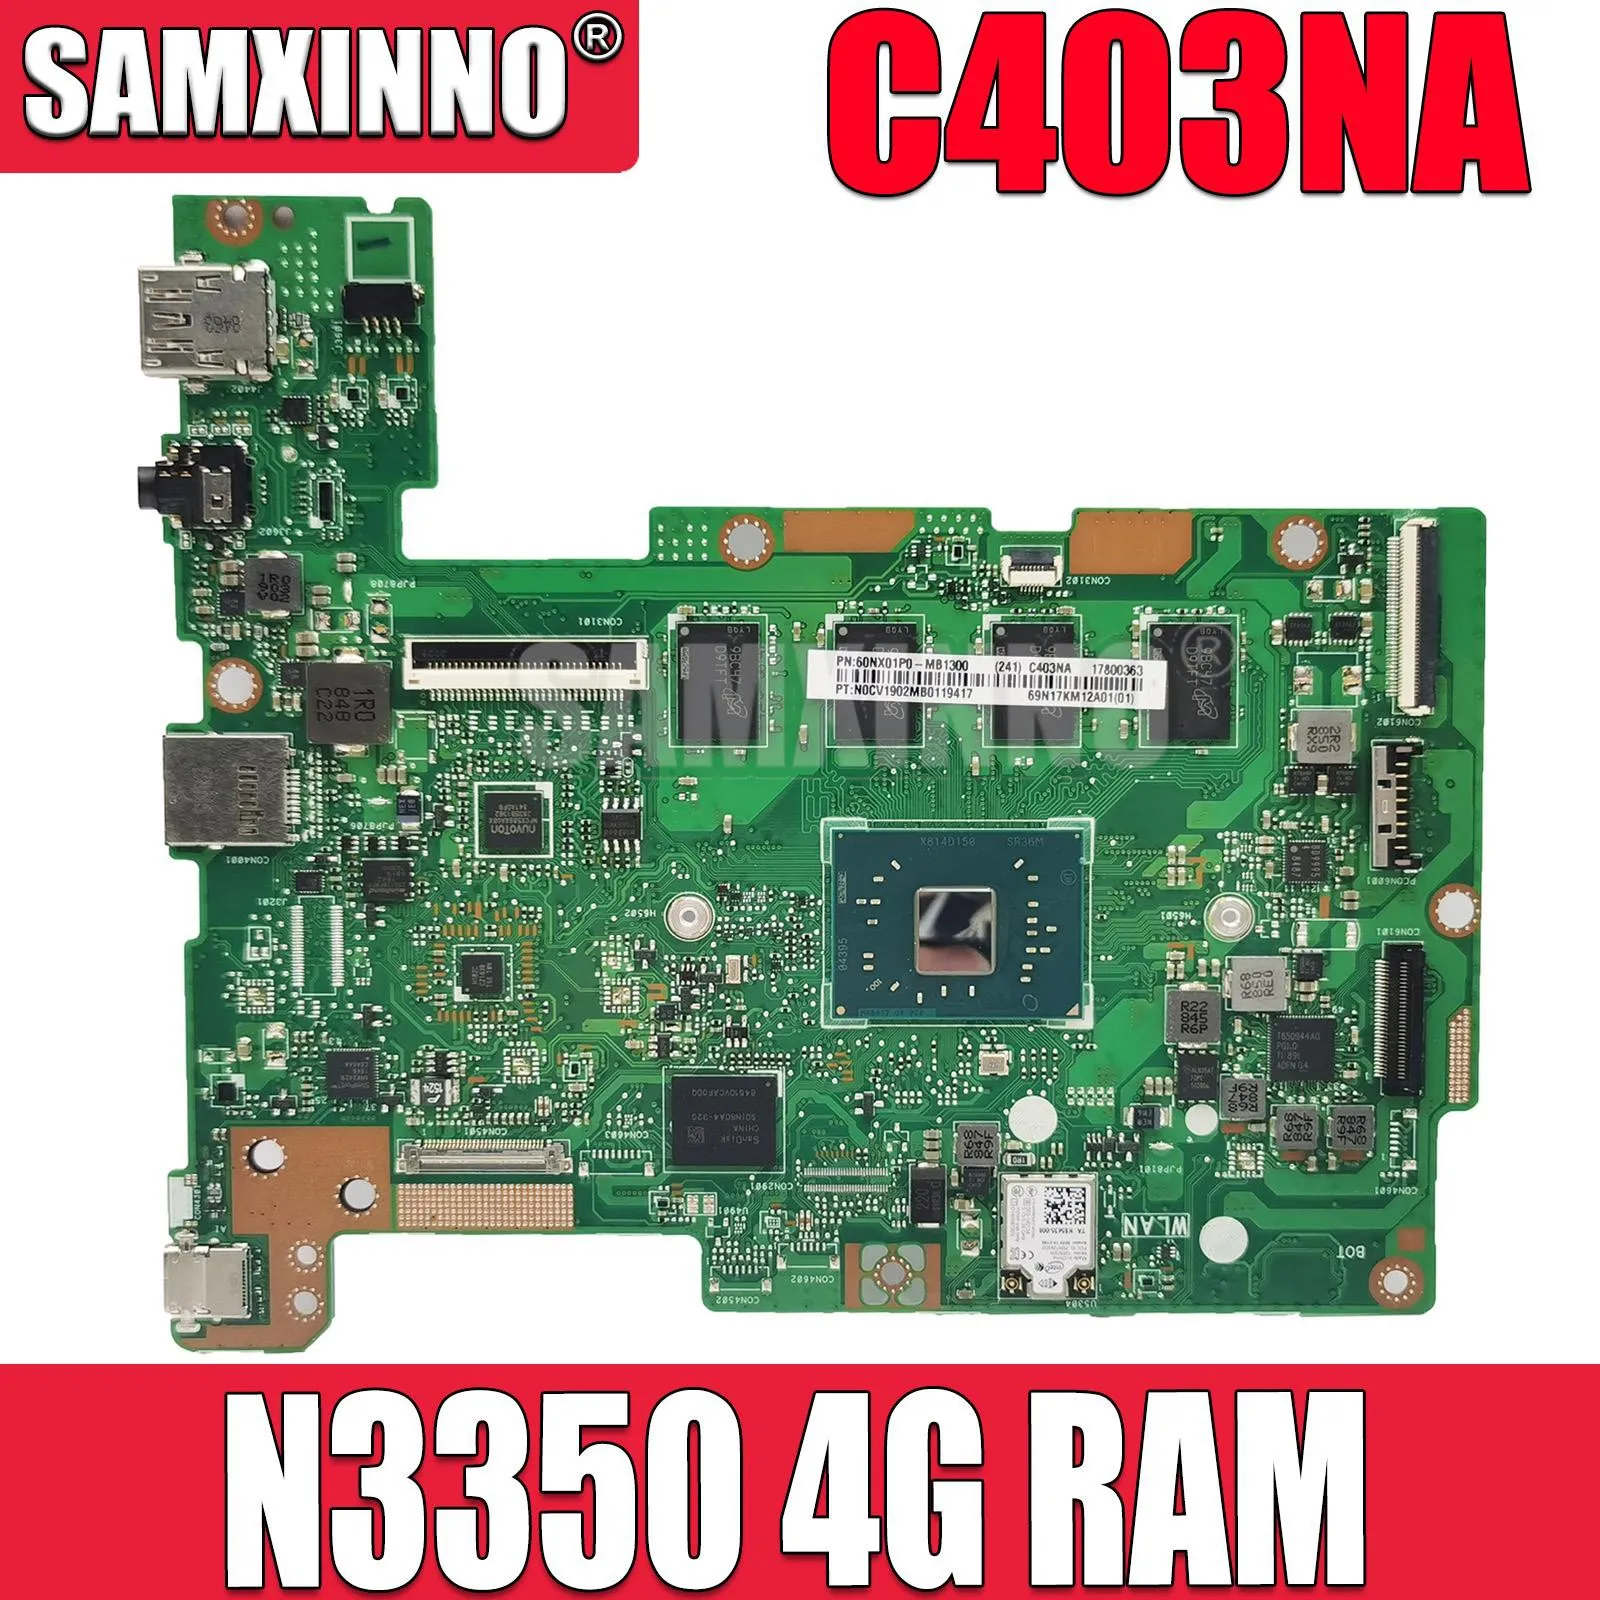 

SAMXINNO C403NA Mainboard For Asus 14 C403NA Chromebook Motherboard (4GB RAM, 32GB Storage, Intel Celeron N3350 Processor)